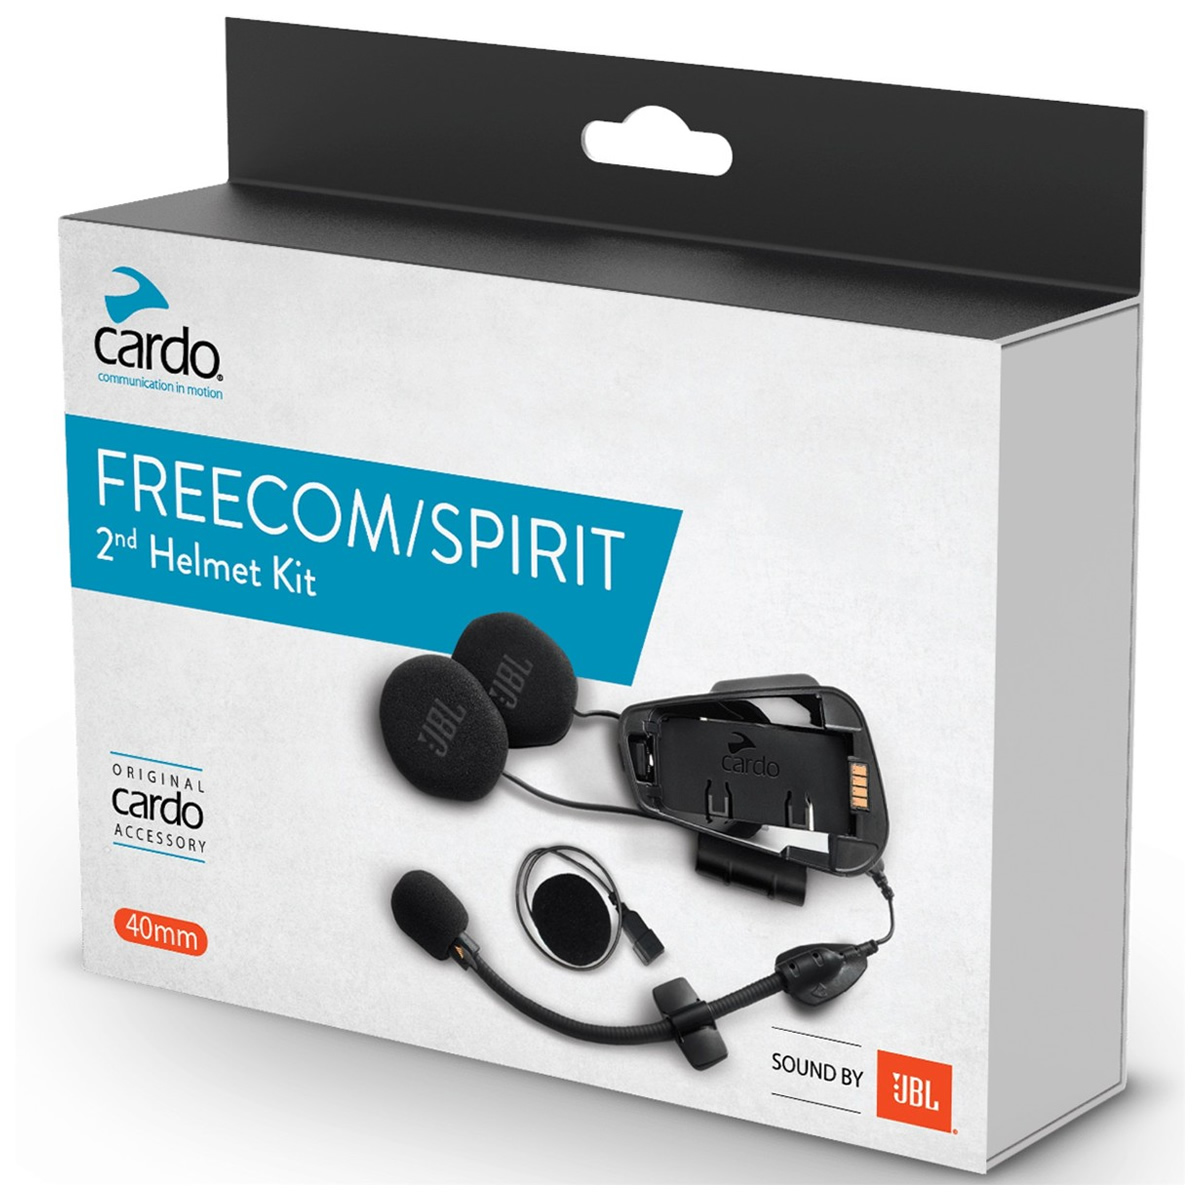 Cardo Freecom/Spirit 2nd Helmet-Kit by JBL